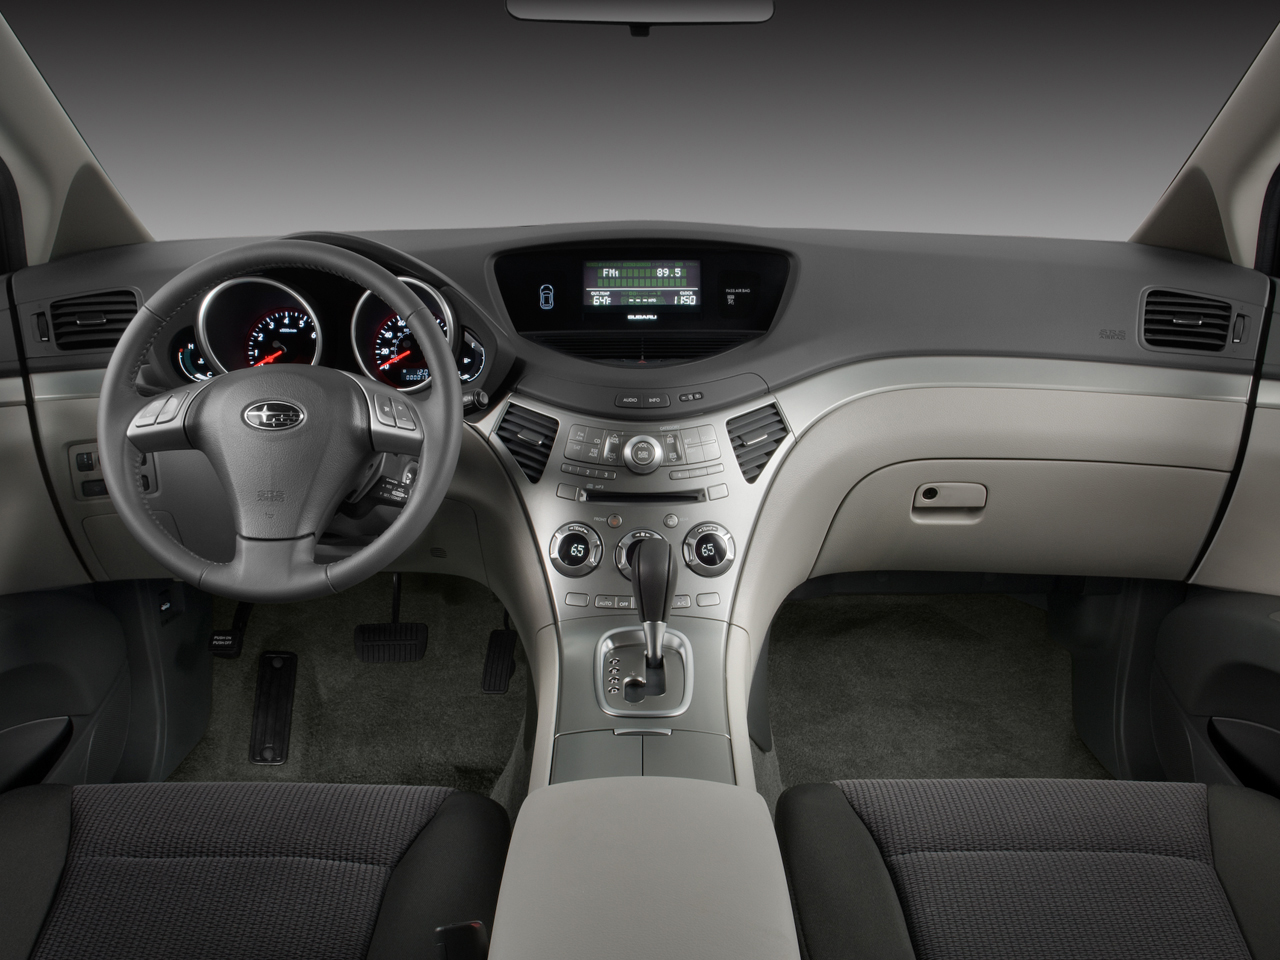 Subaru Tribeca interiorpicture 11 , reviews, news, specs, buy car